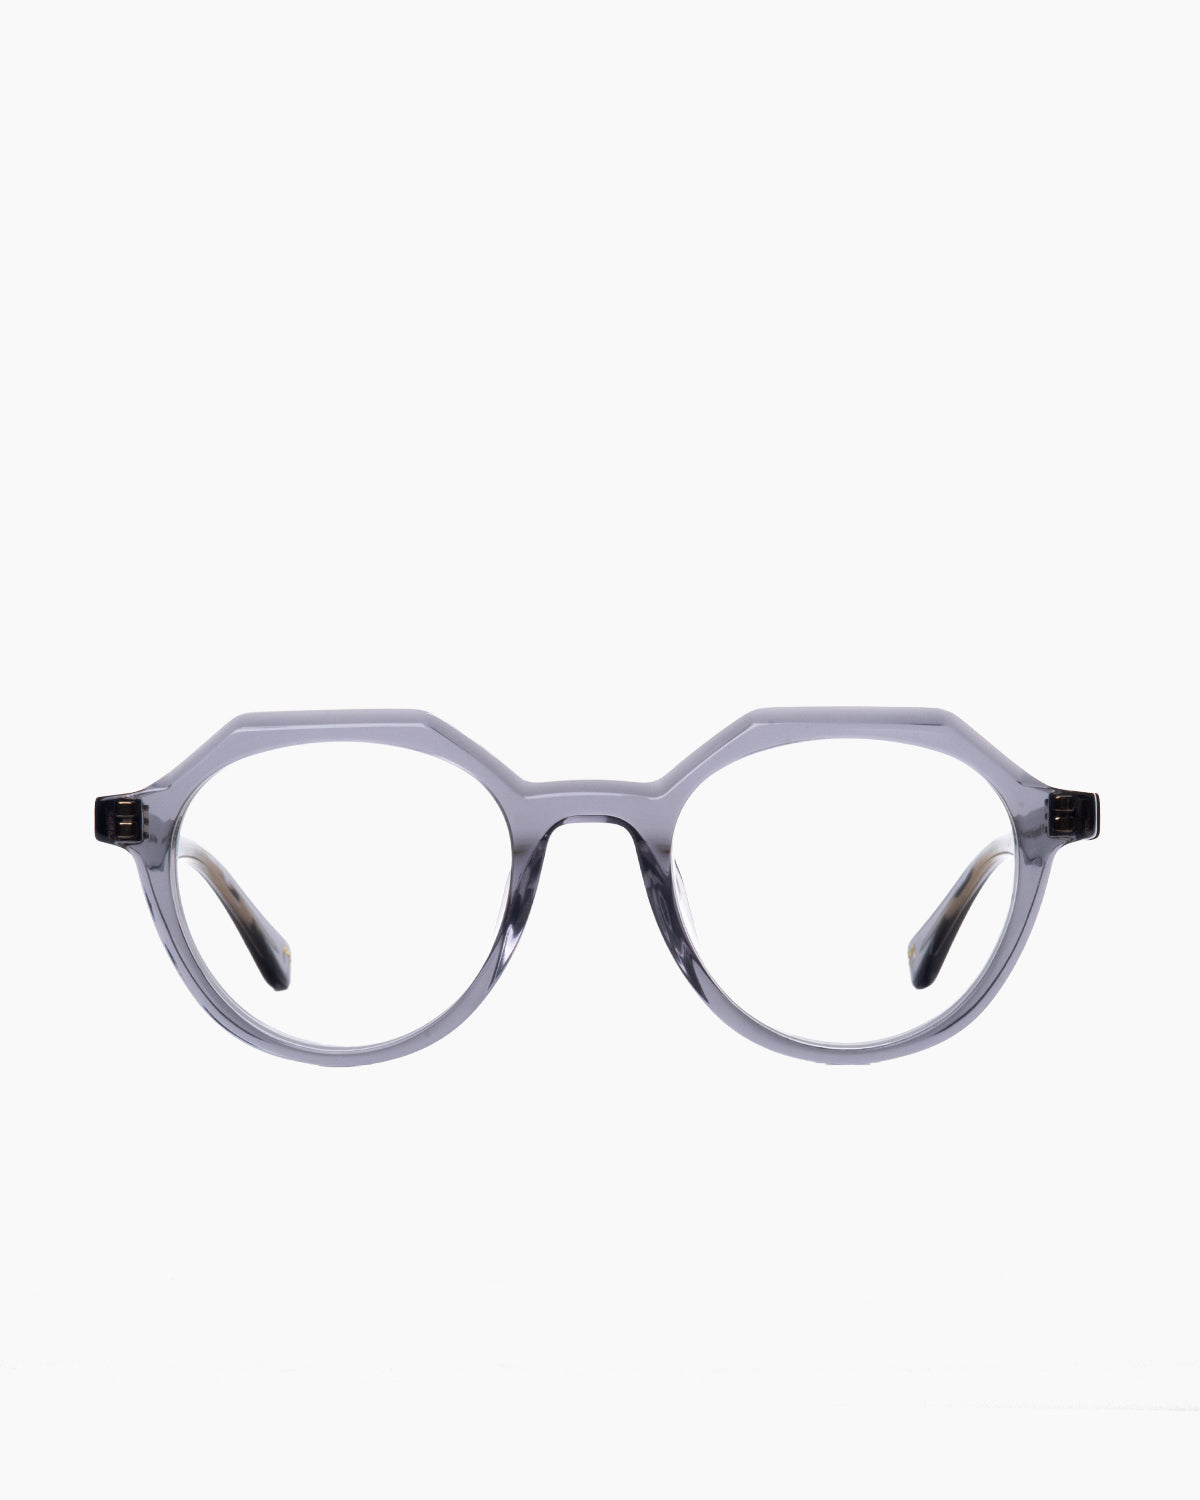 Spectacleeyeworks - Anita - c731 | Bar à lunettes